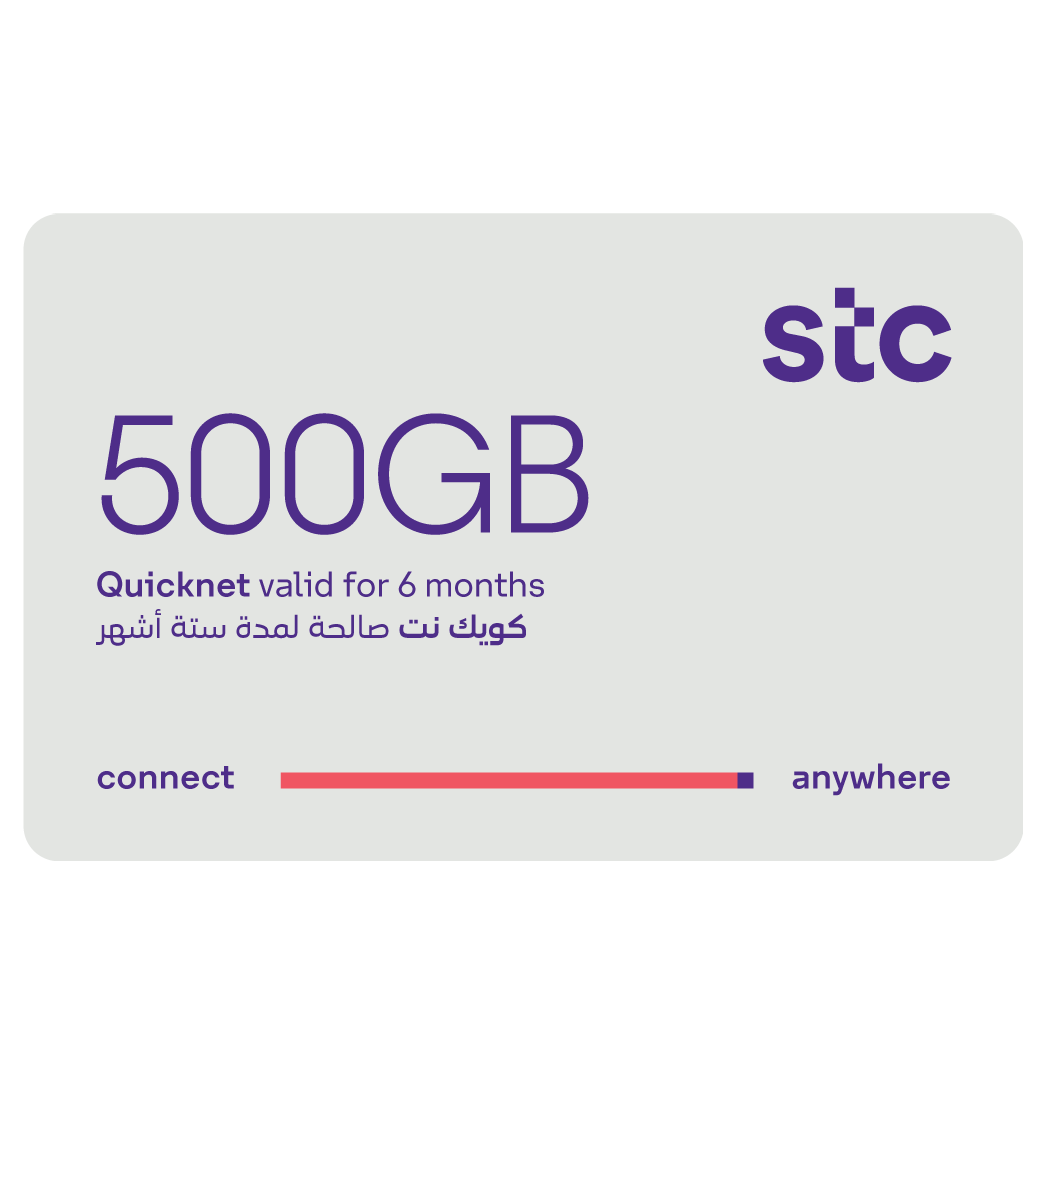 STC QuickNet 500GB Data Recharge 6 Months - KSA